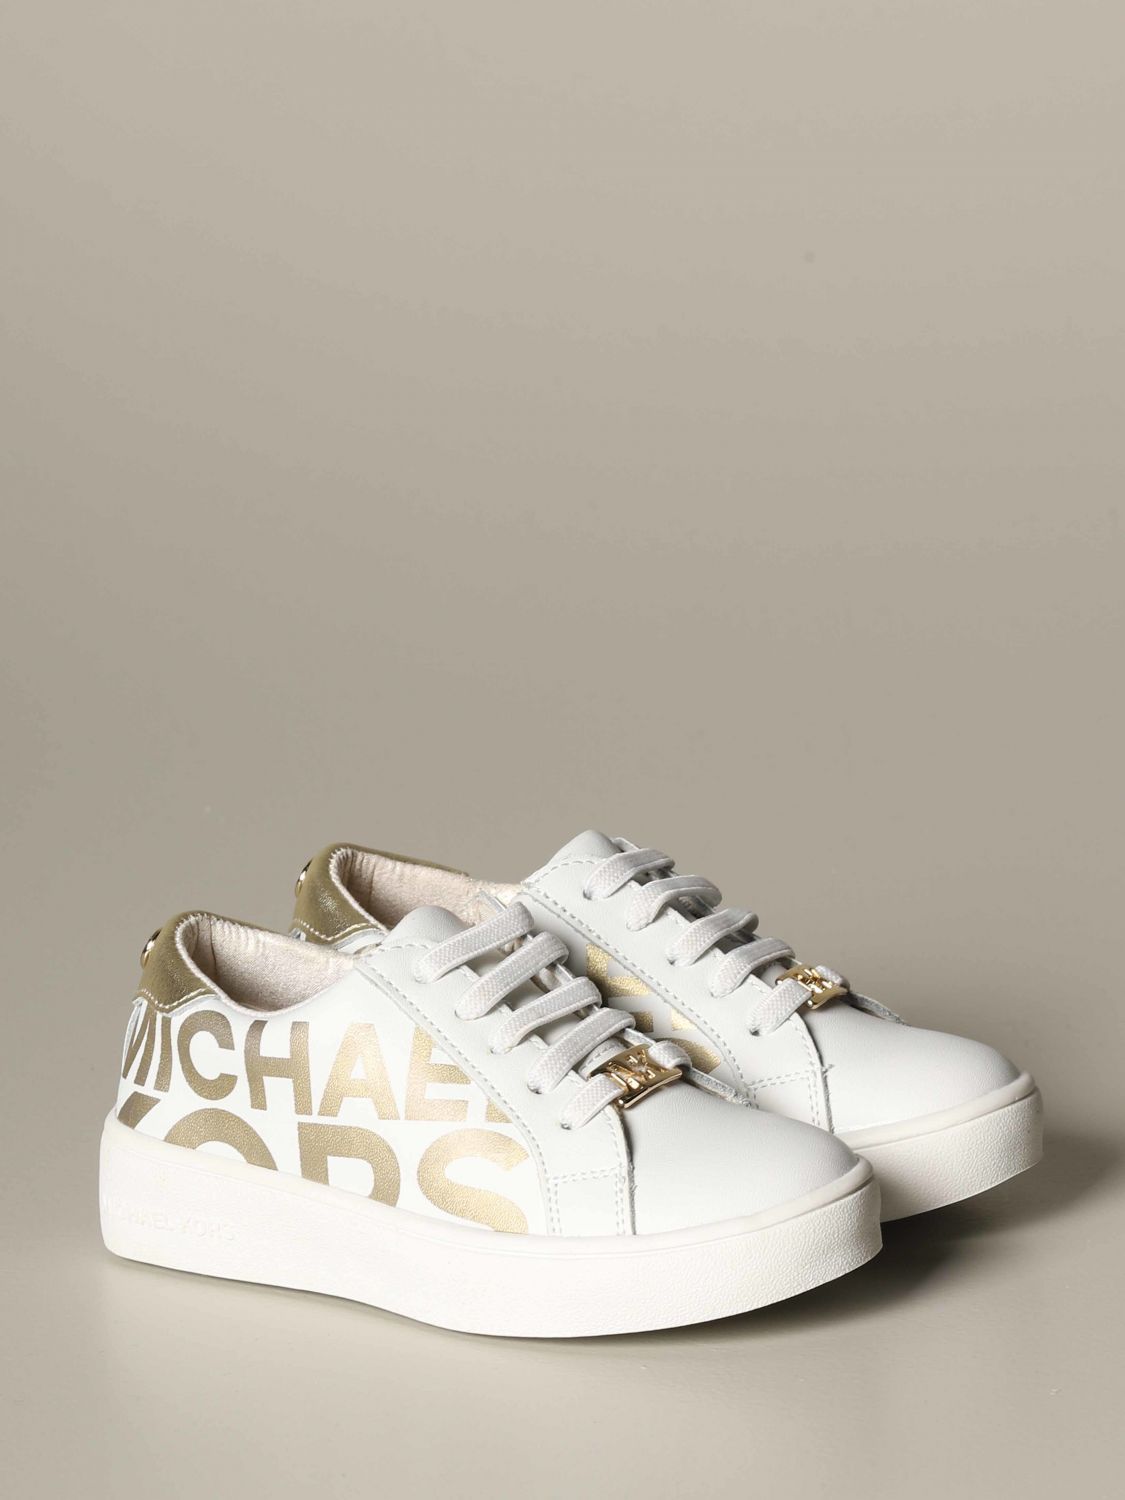 michael kors junior shoes